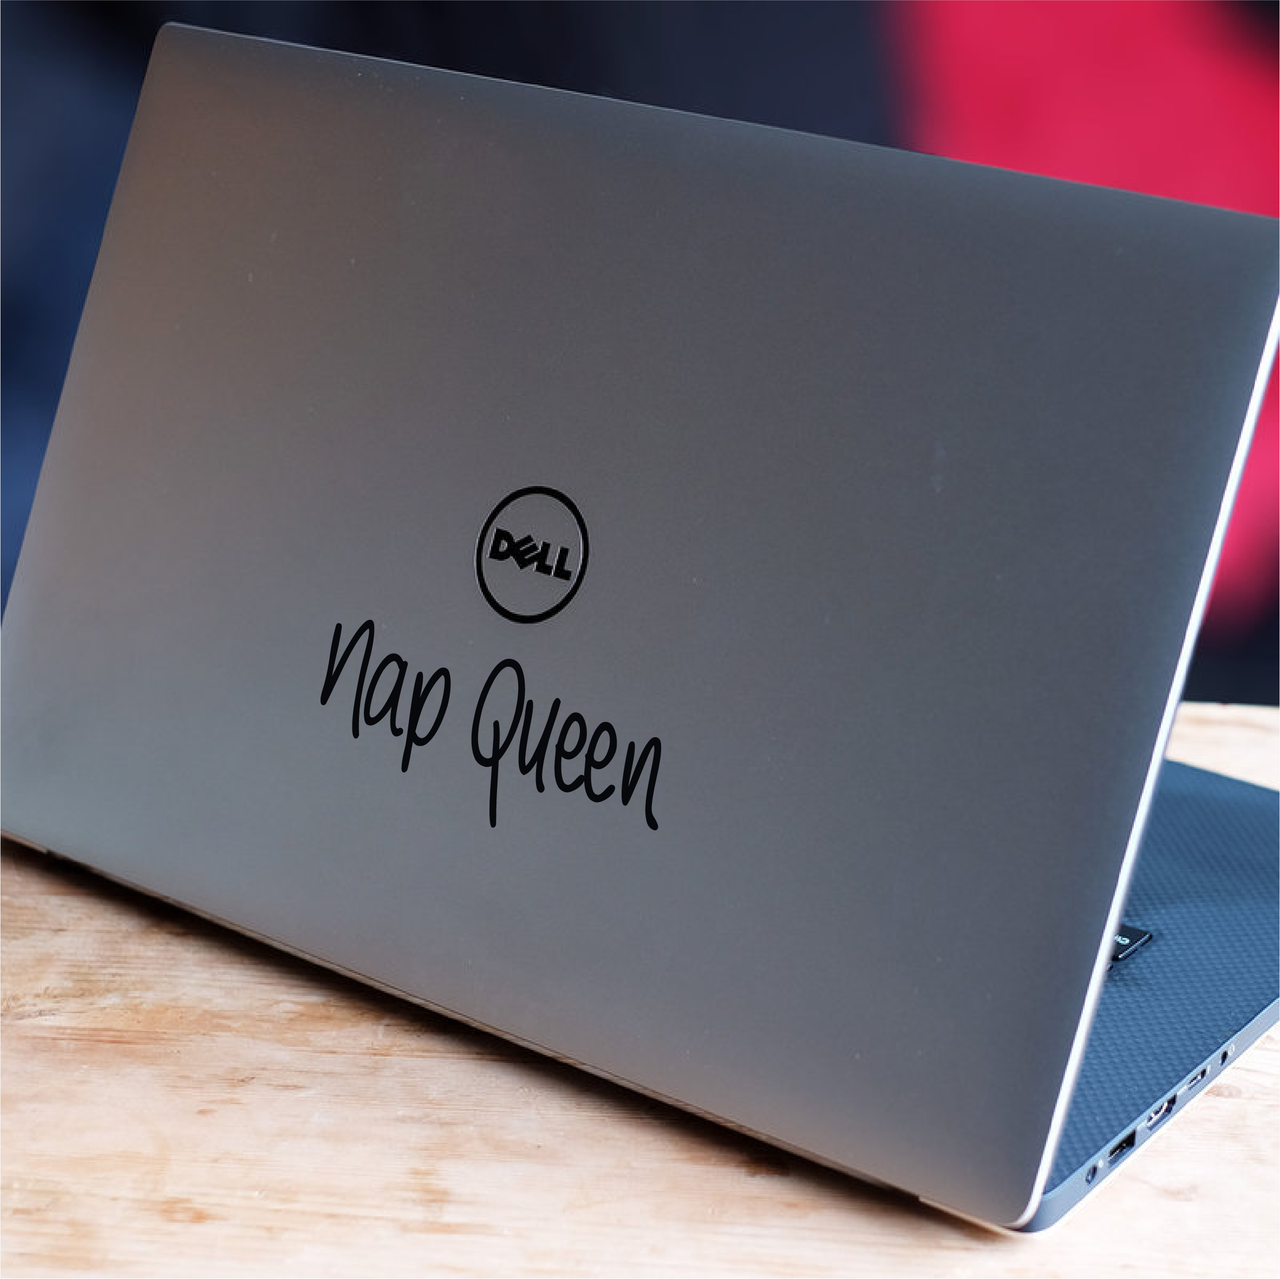 Nap Queen Laptop Decal